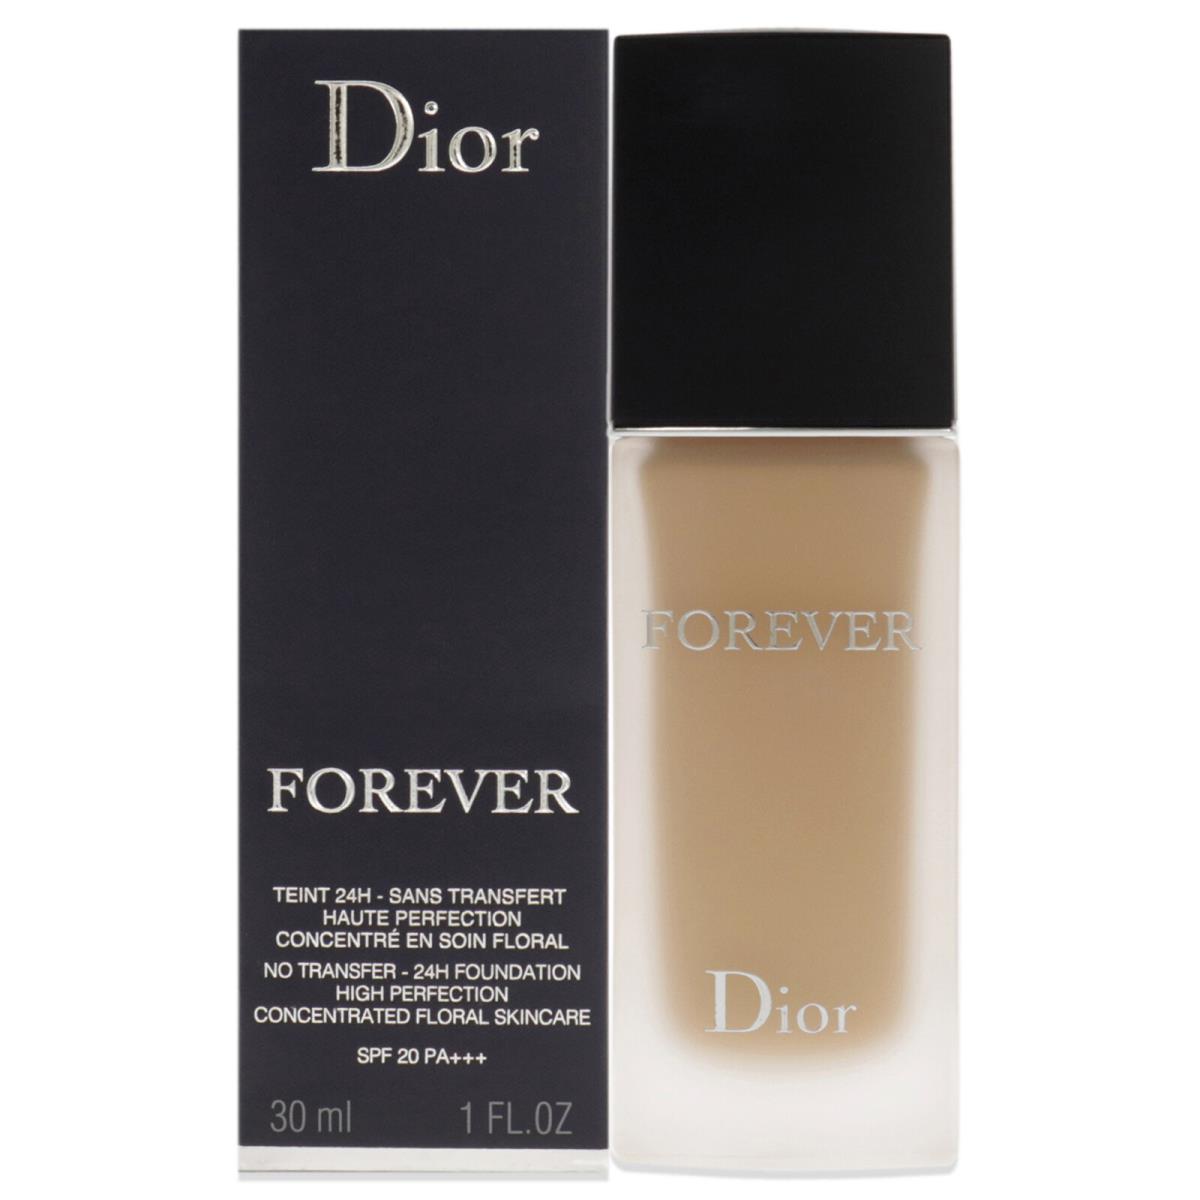 Dior Forever Foundation Spf 20 - 3WP Warm Peach by Christian Dior 1 oz